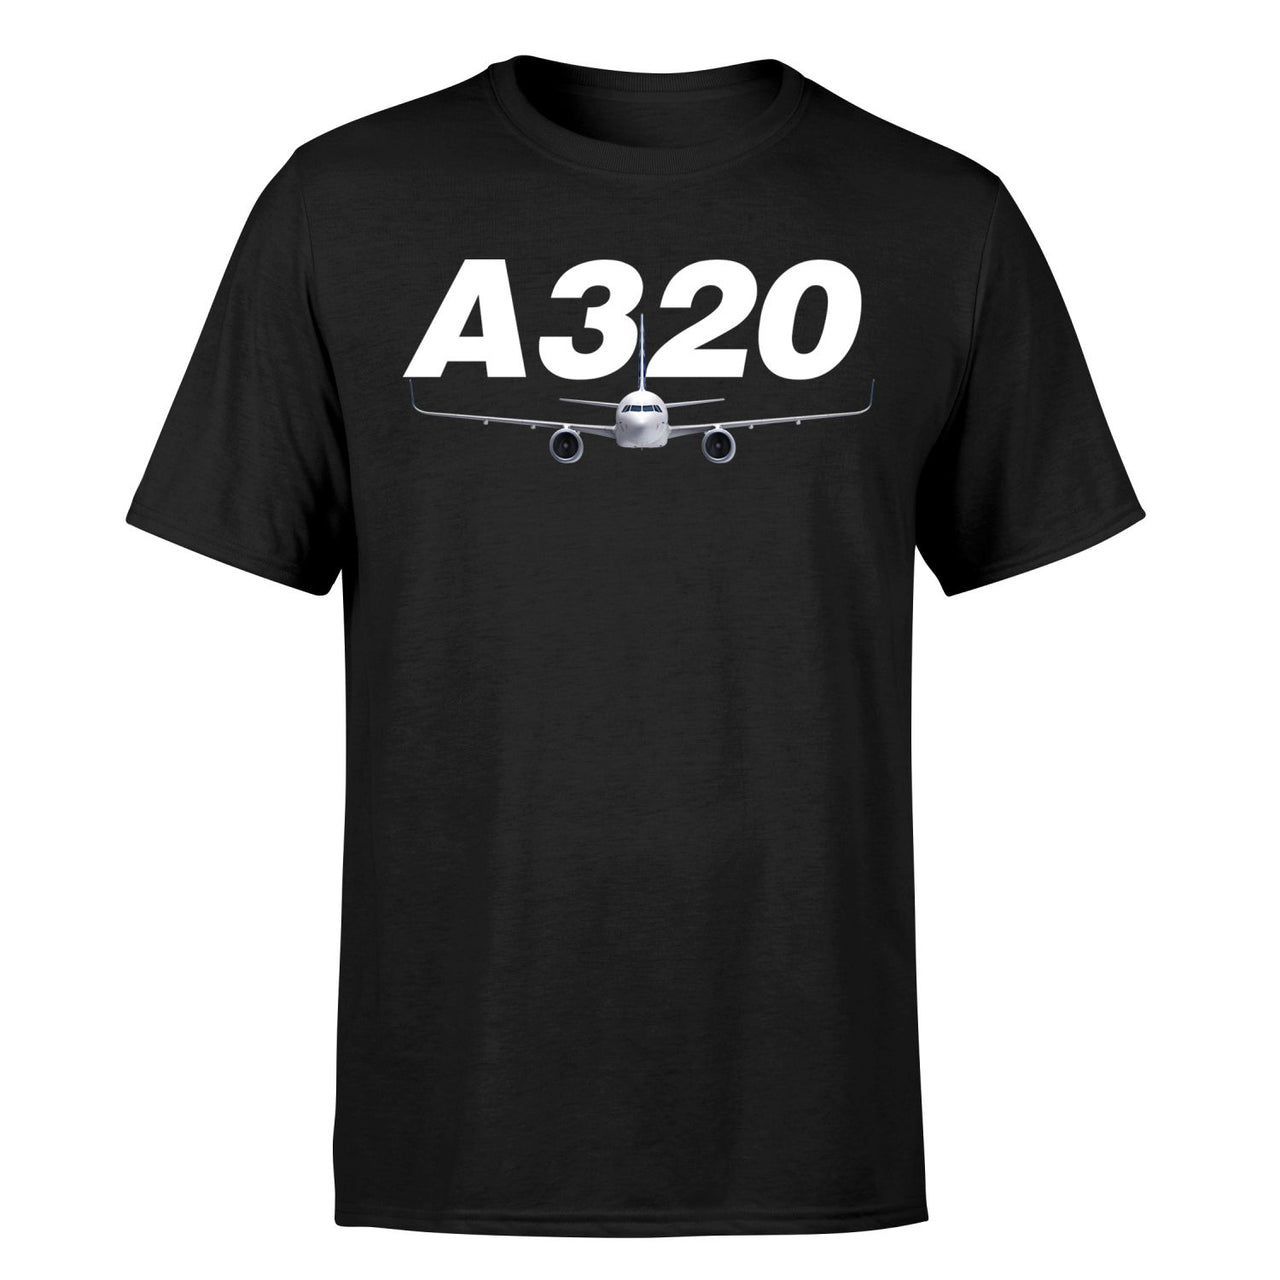 Super Airbus A320 Designed T-Shirts